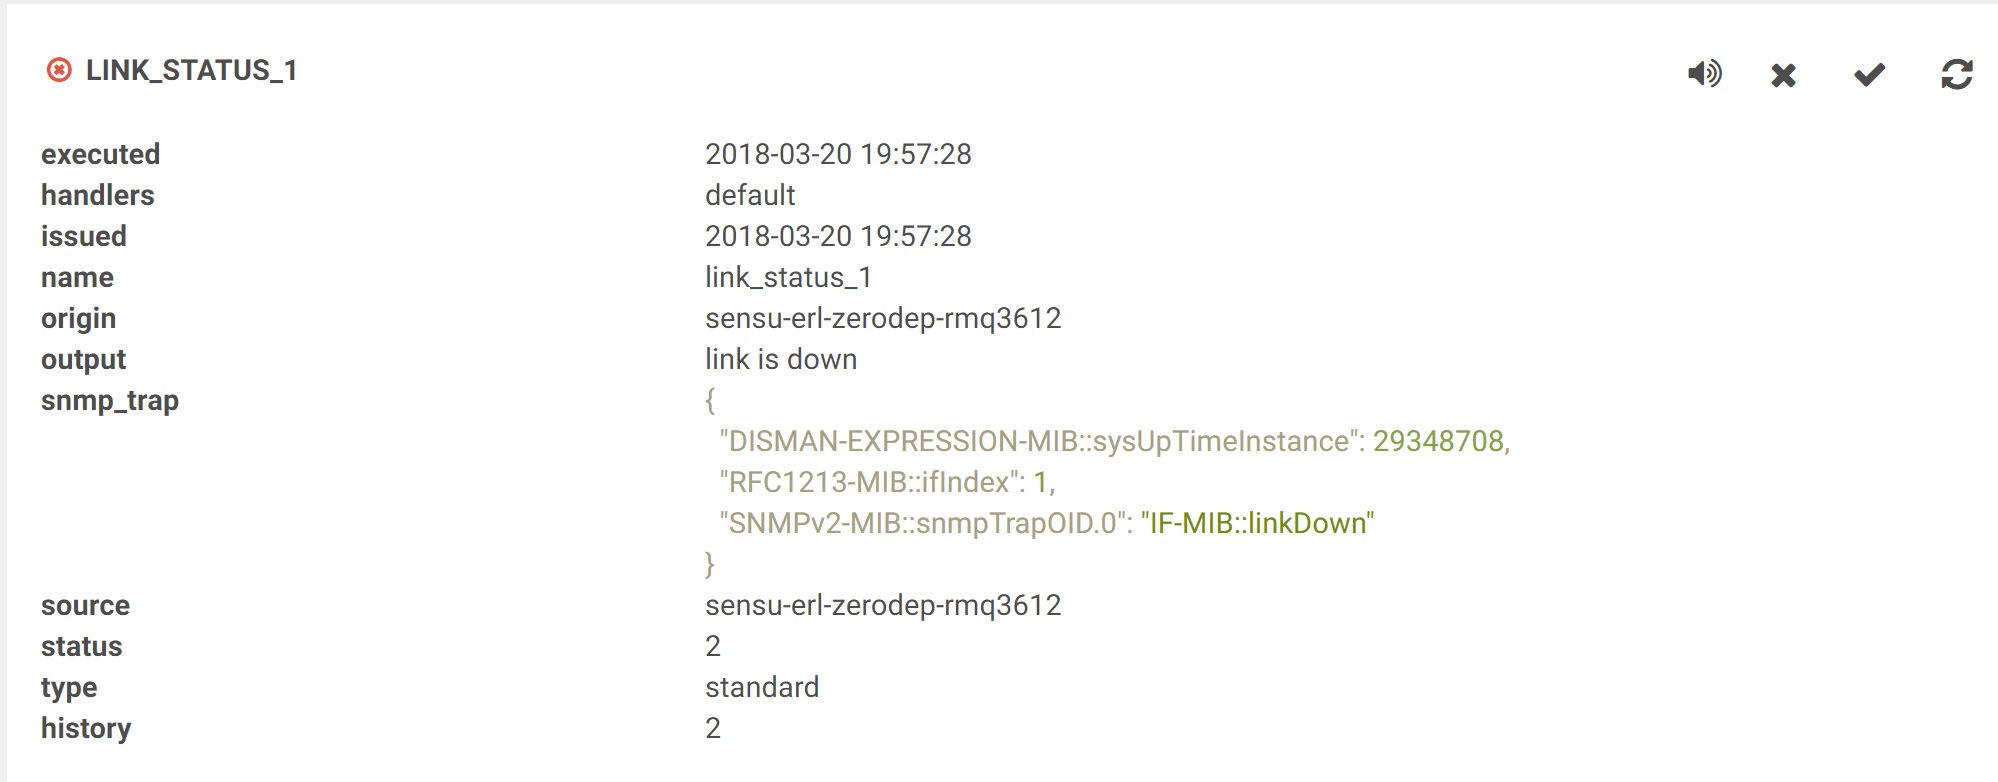 Sensu Enterprise Dashboard confirmation of SNMP link down, in detail